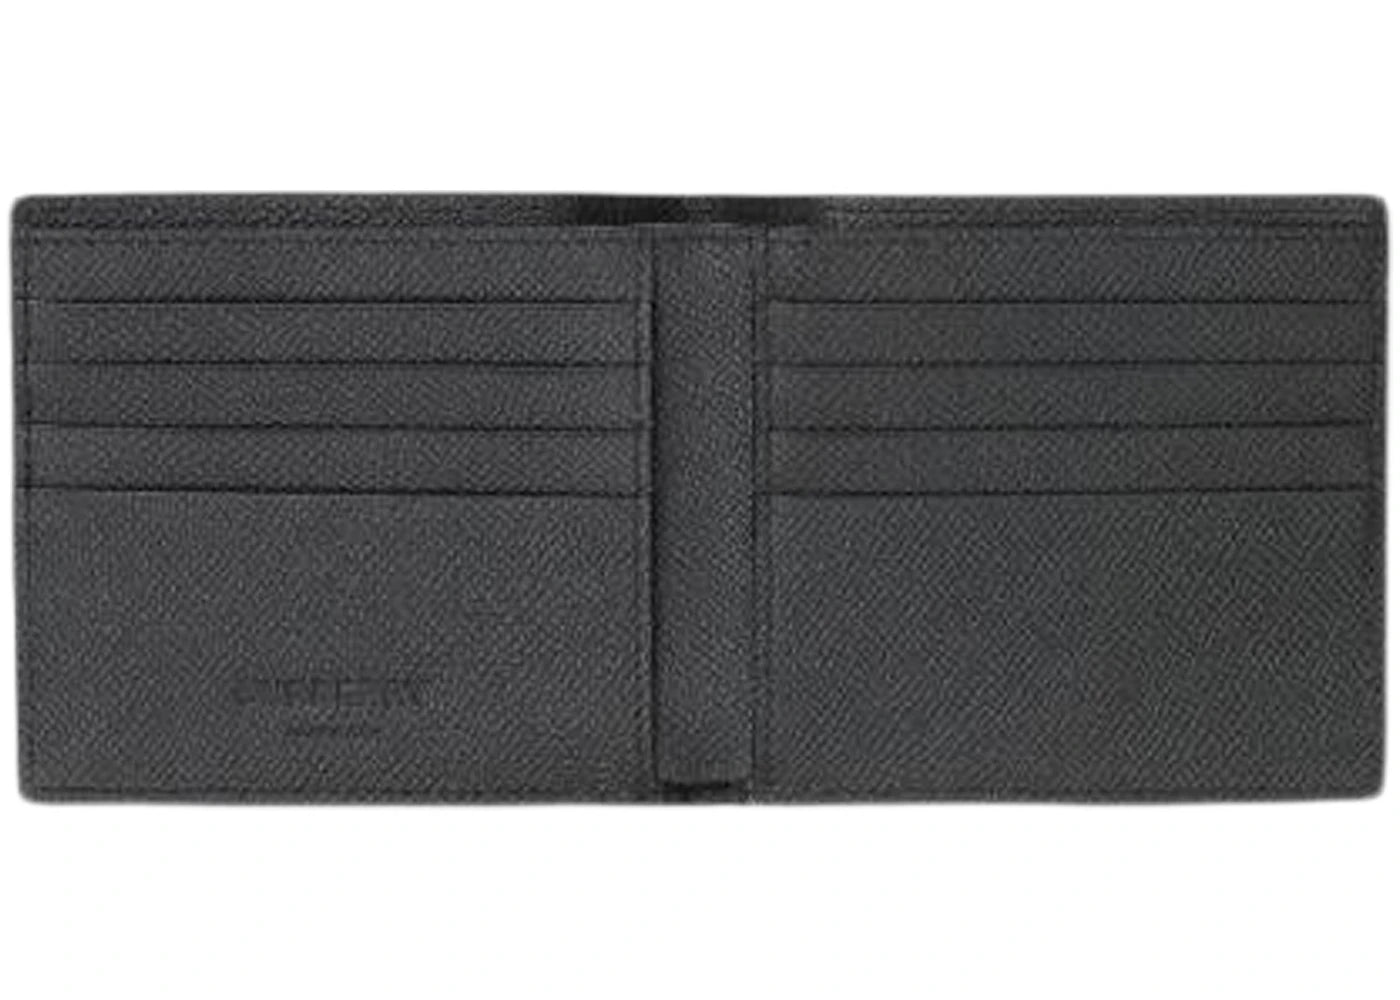 Burberry Grainy Leather International Bifold Wallet Black Last